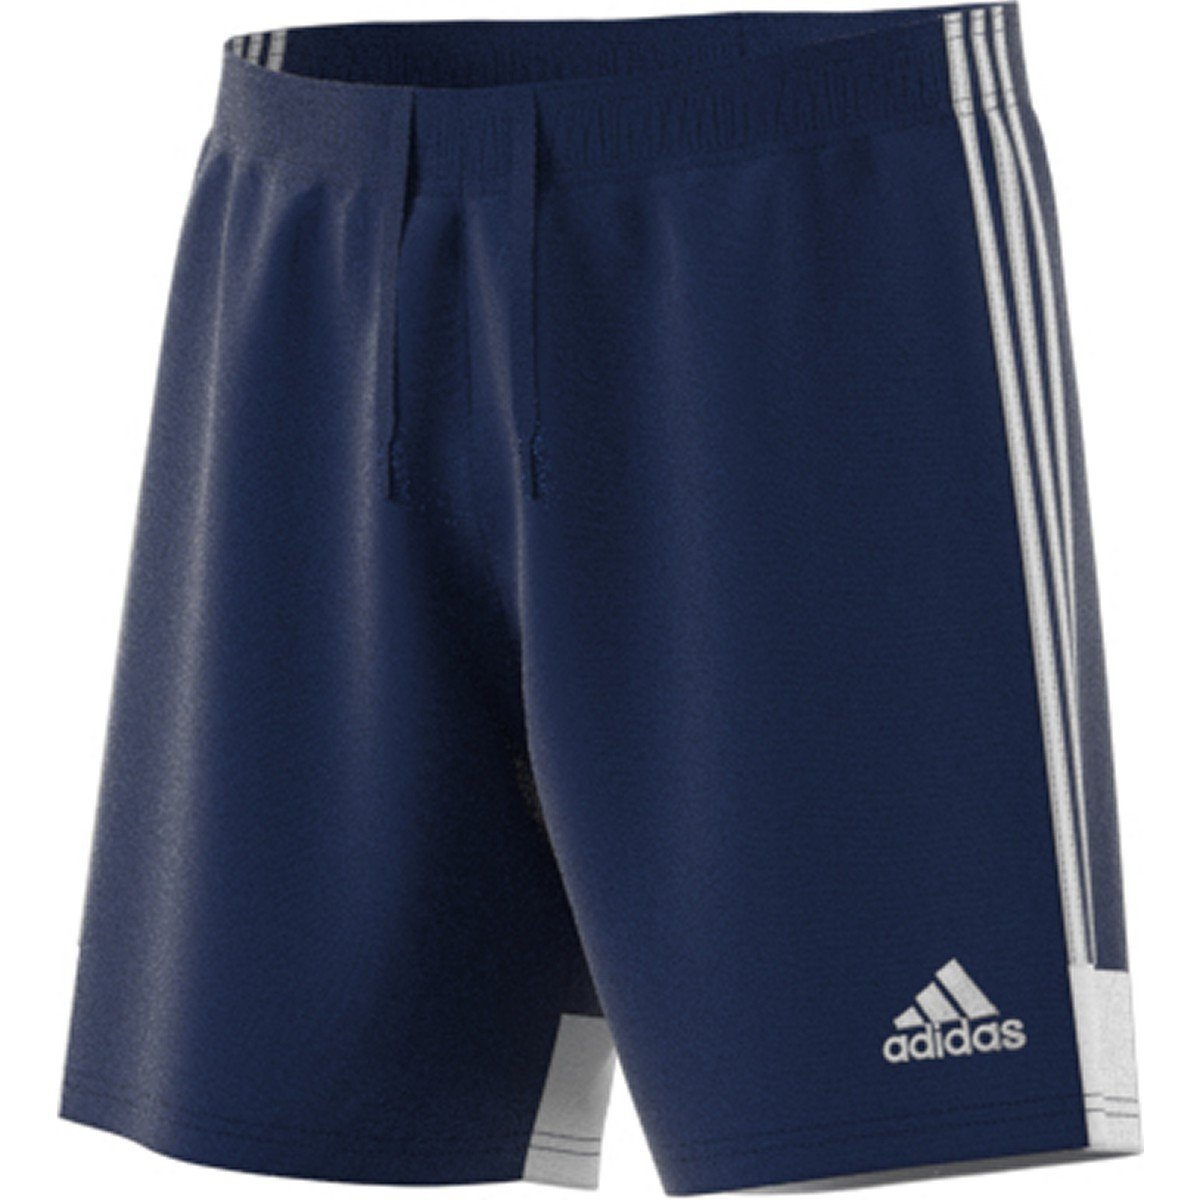 adidas Men's Tastigo 19 Shorts | DP3245 Soccer Apparel adidas XS dark blue/white 